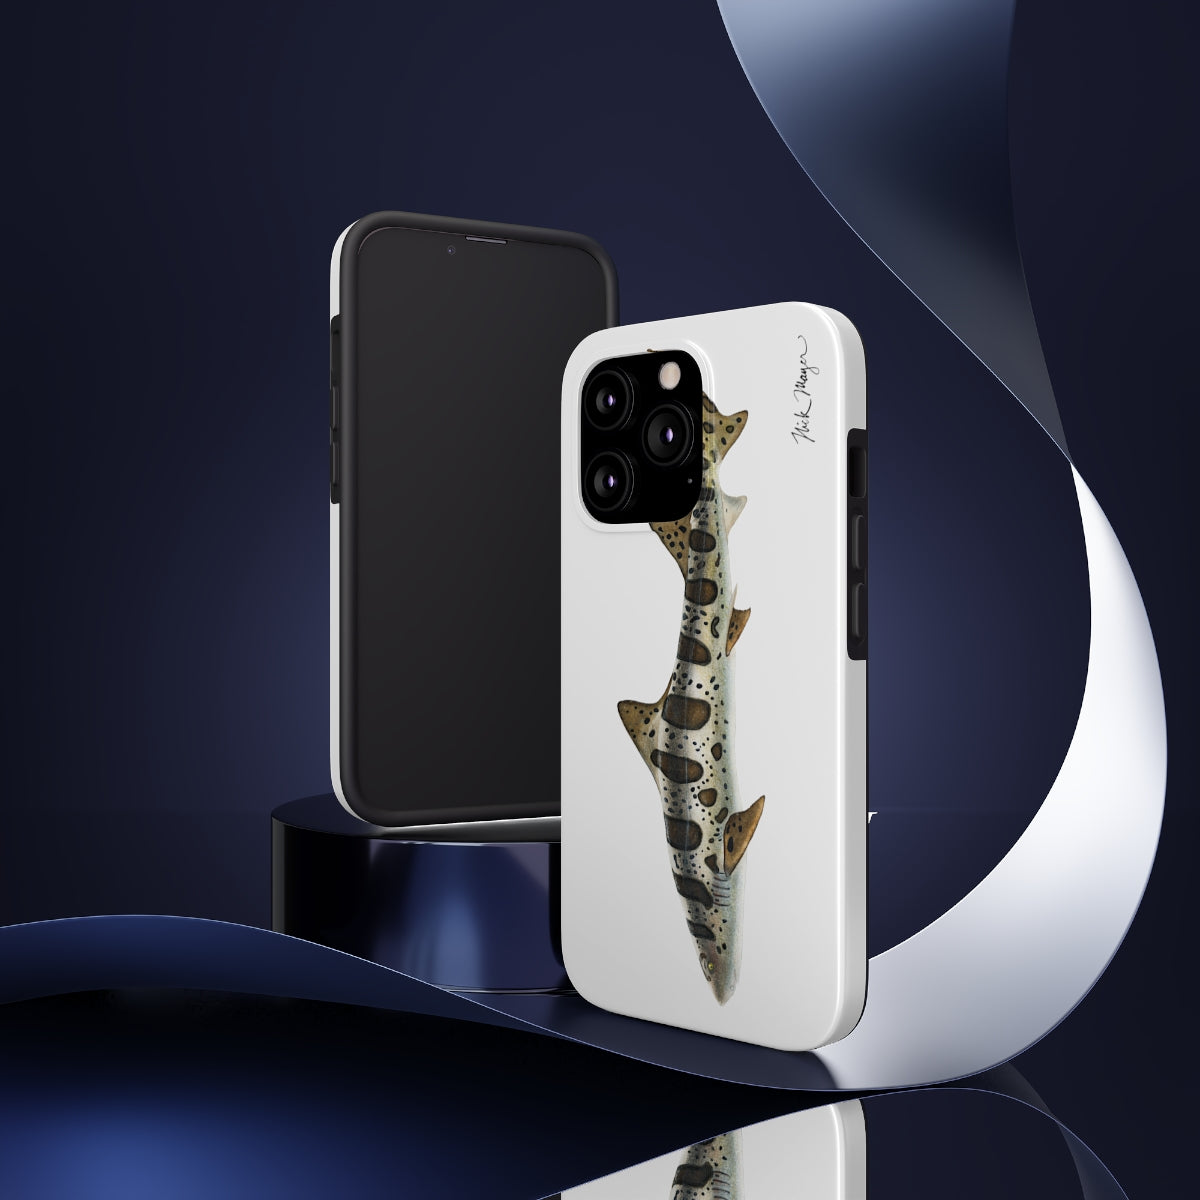 Leopard Shark Phone Case (iPhone)